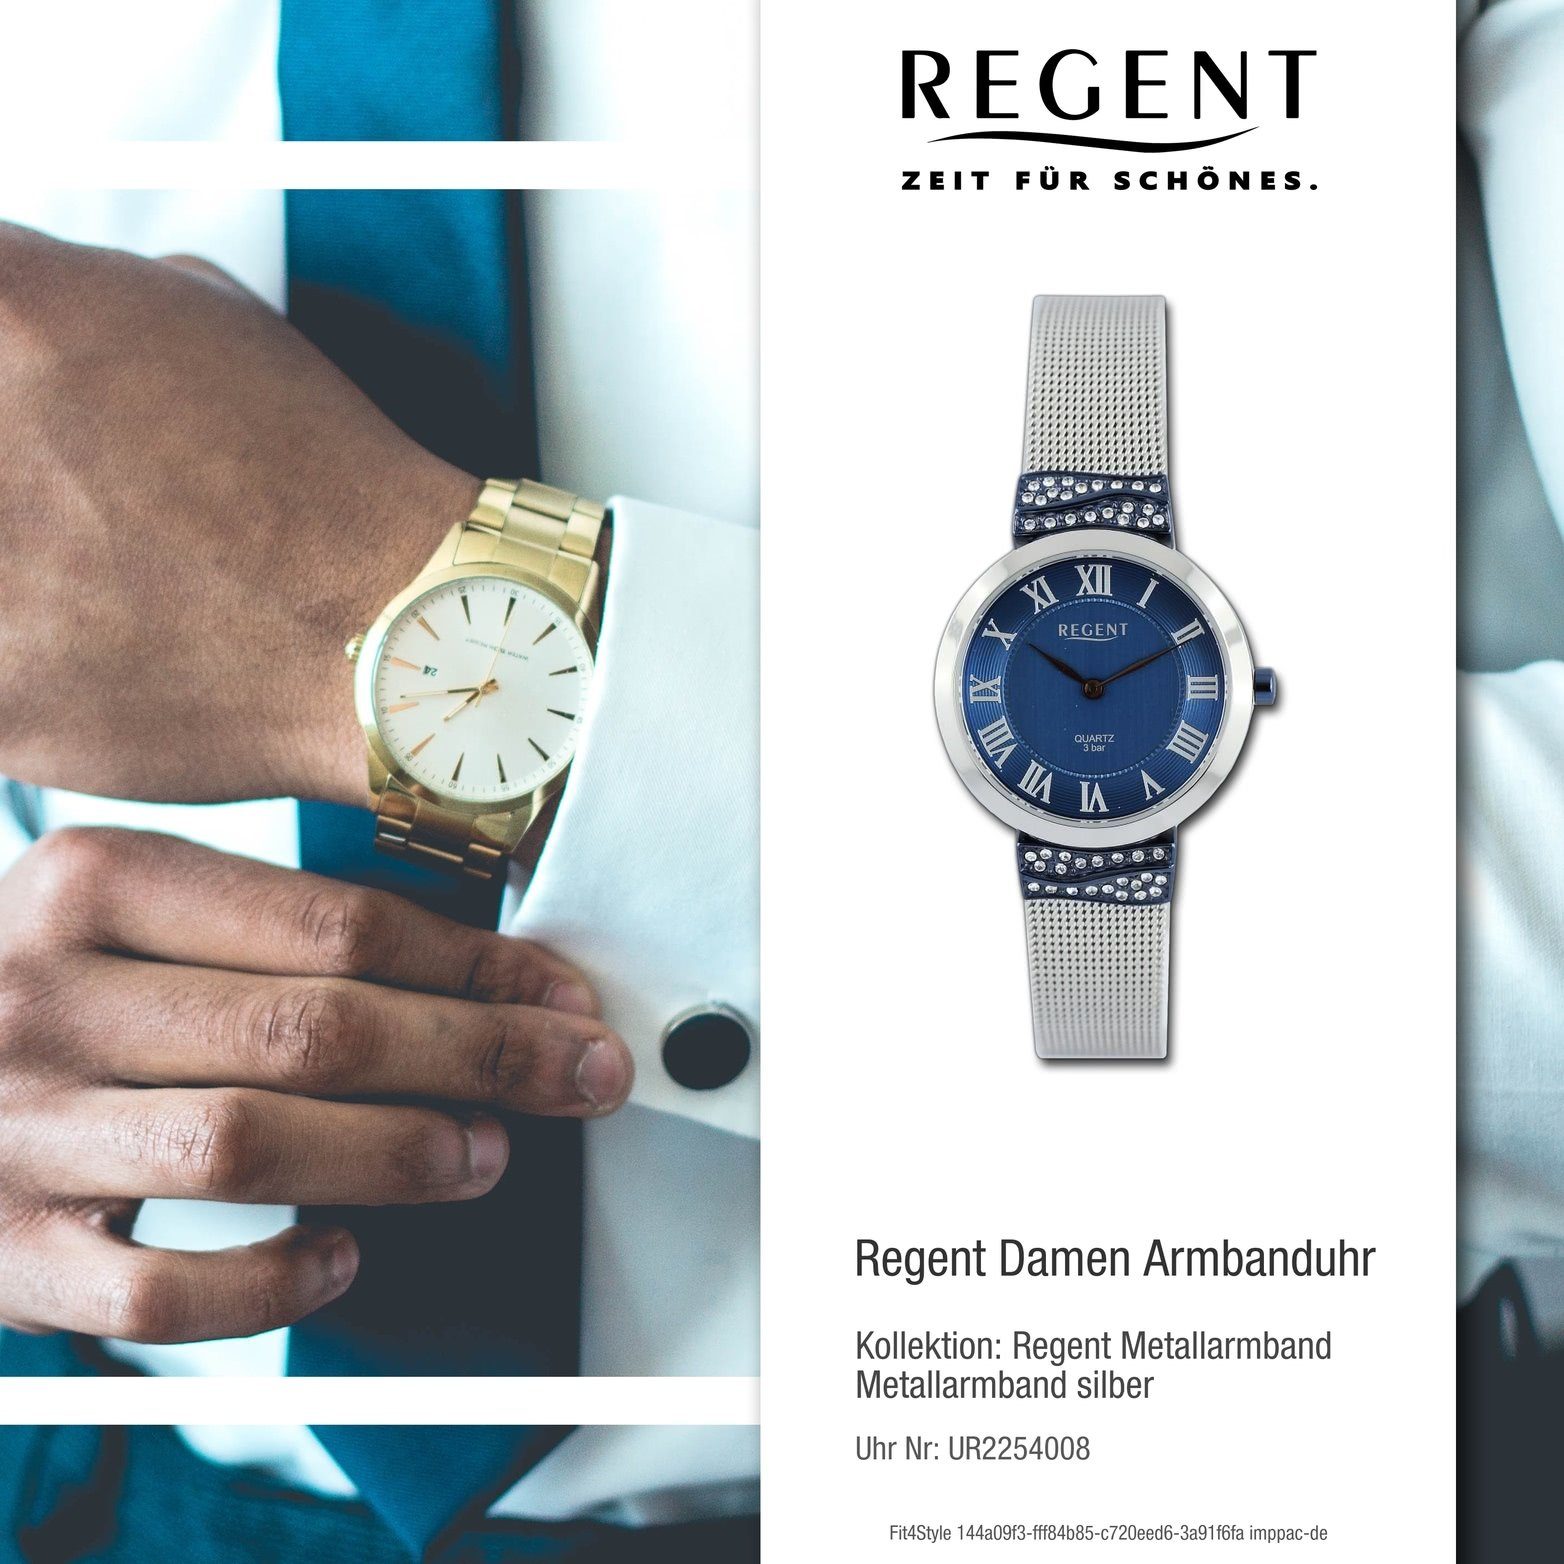 groß Metallarmband rundes Quarzuhr Armbanduhr Analog, silber, Damenuhr Regent Damen dunkelblau, Gehäuse, (30mm) Regent